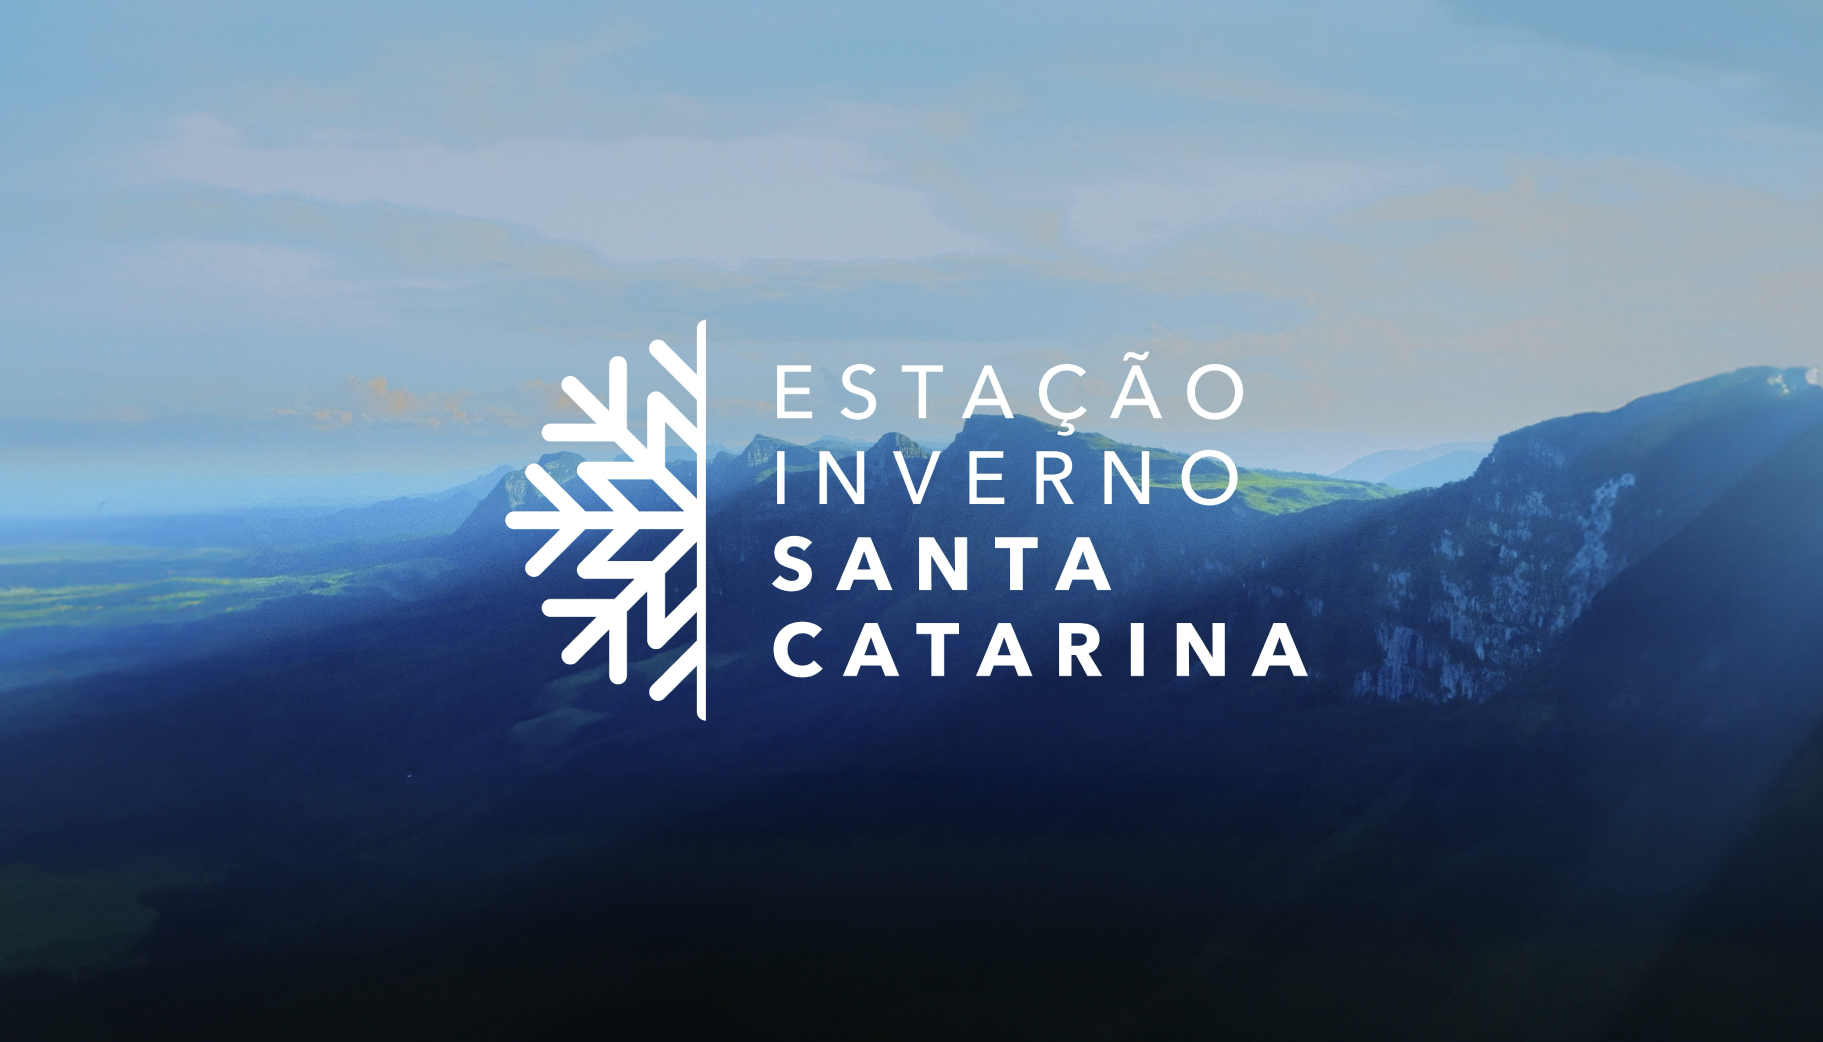 Campanha destaca Santa Catarina como o inverno do Brasil